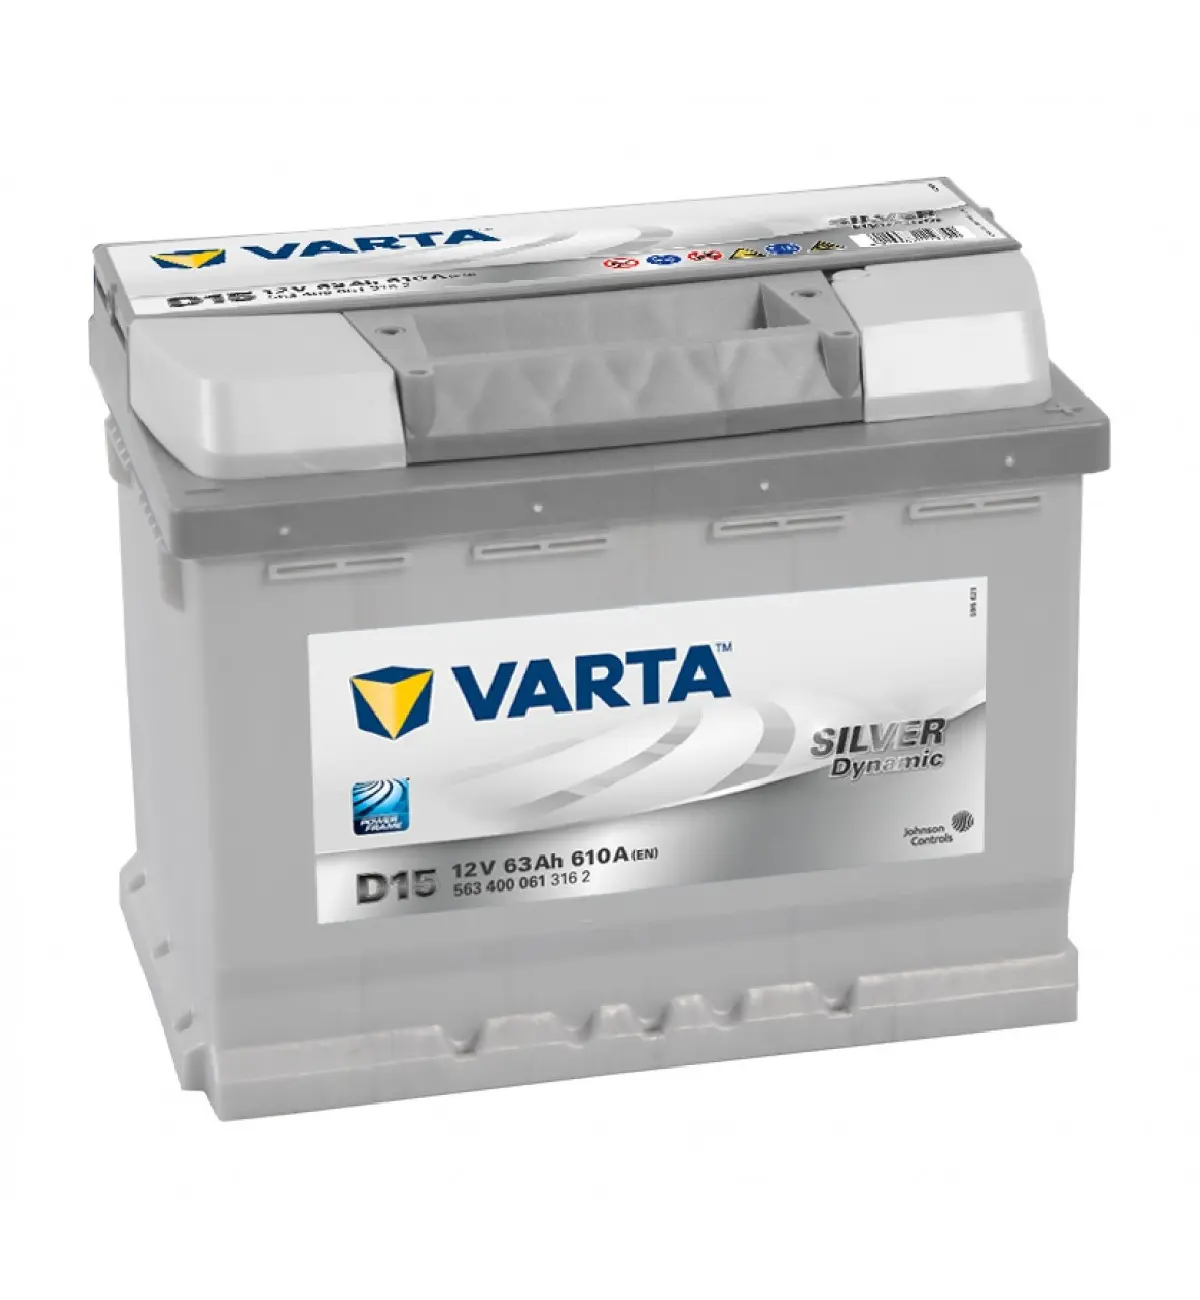 Купить Аккумулятор Varta Silver Dynamic 63Ah (0) 610A (D15)